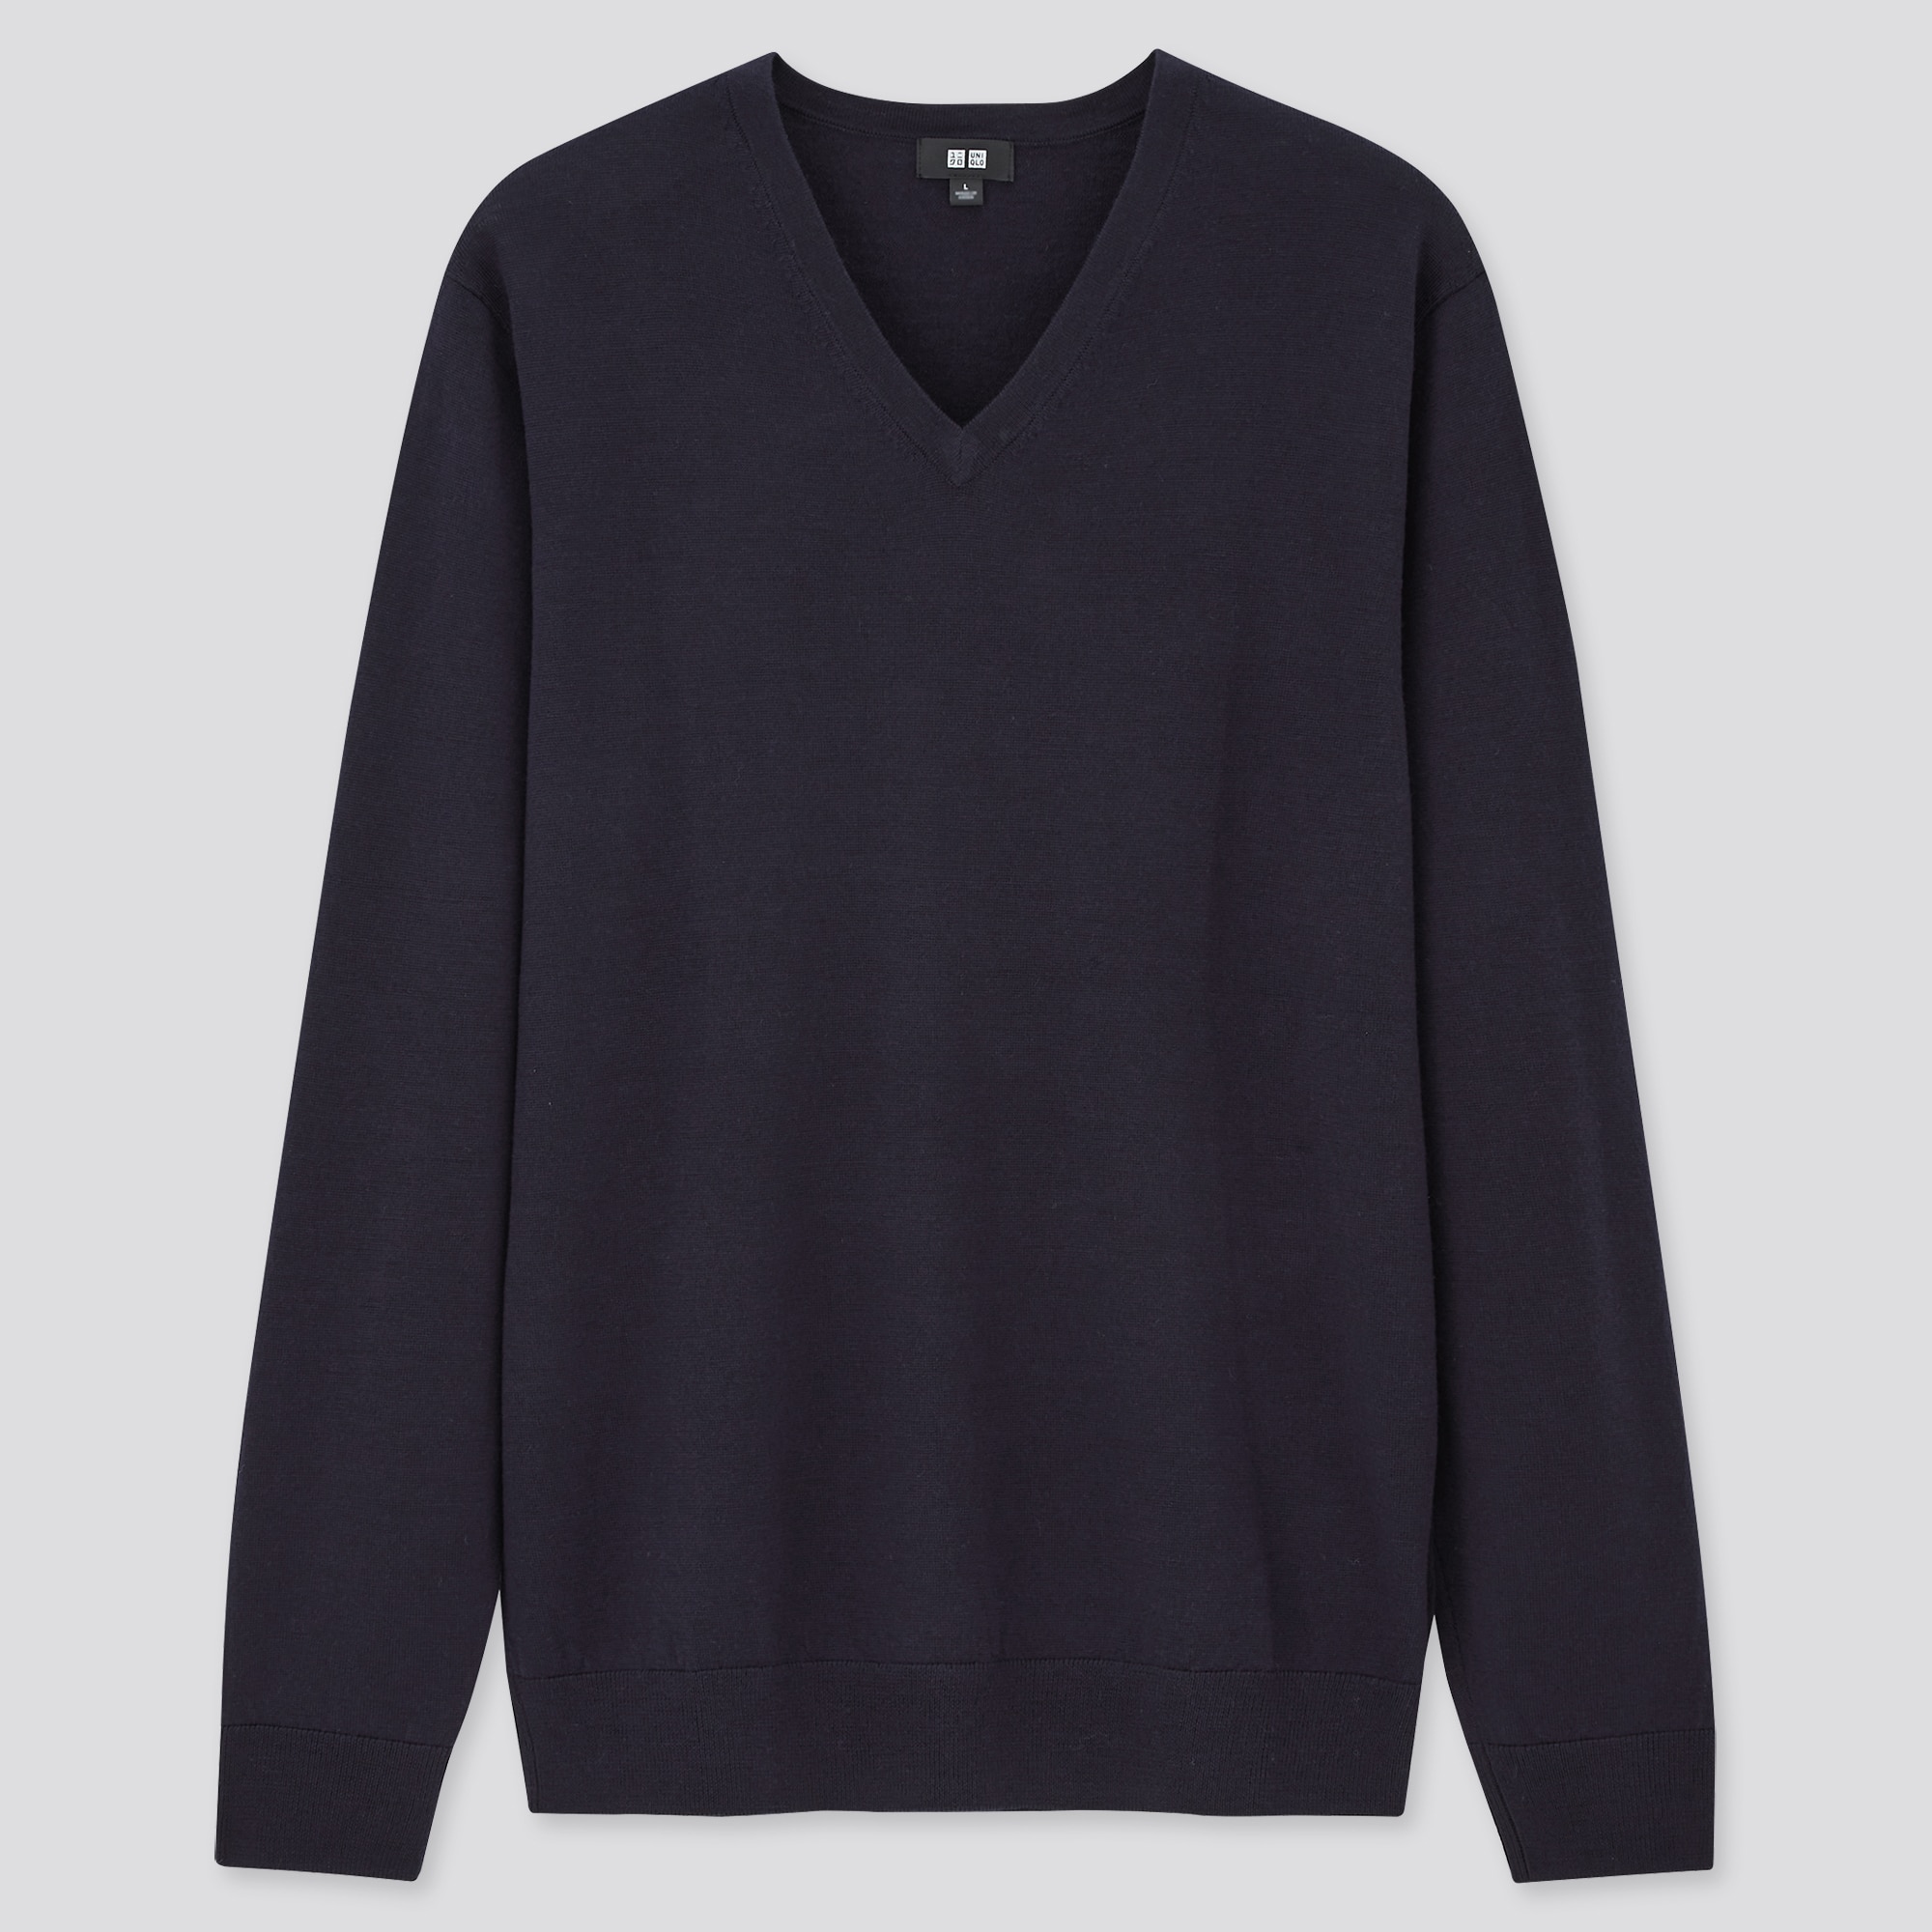 discount 94% NoName sweatshirt MEN FASHION Jumpers & Sweatshirts Sports Navy Blue XL 